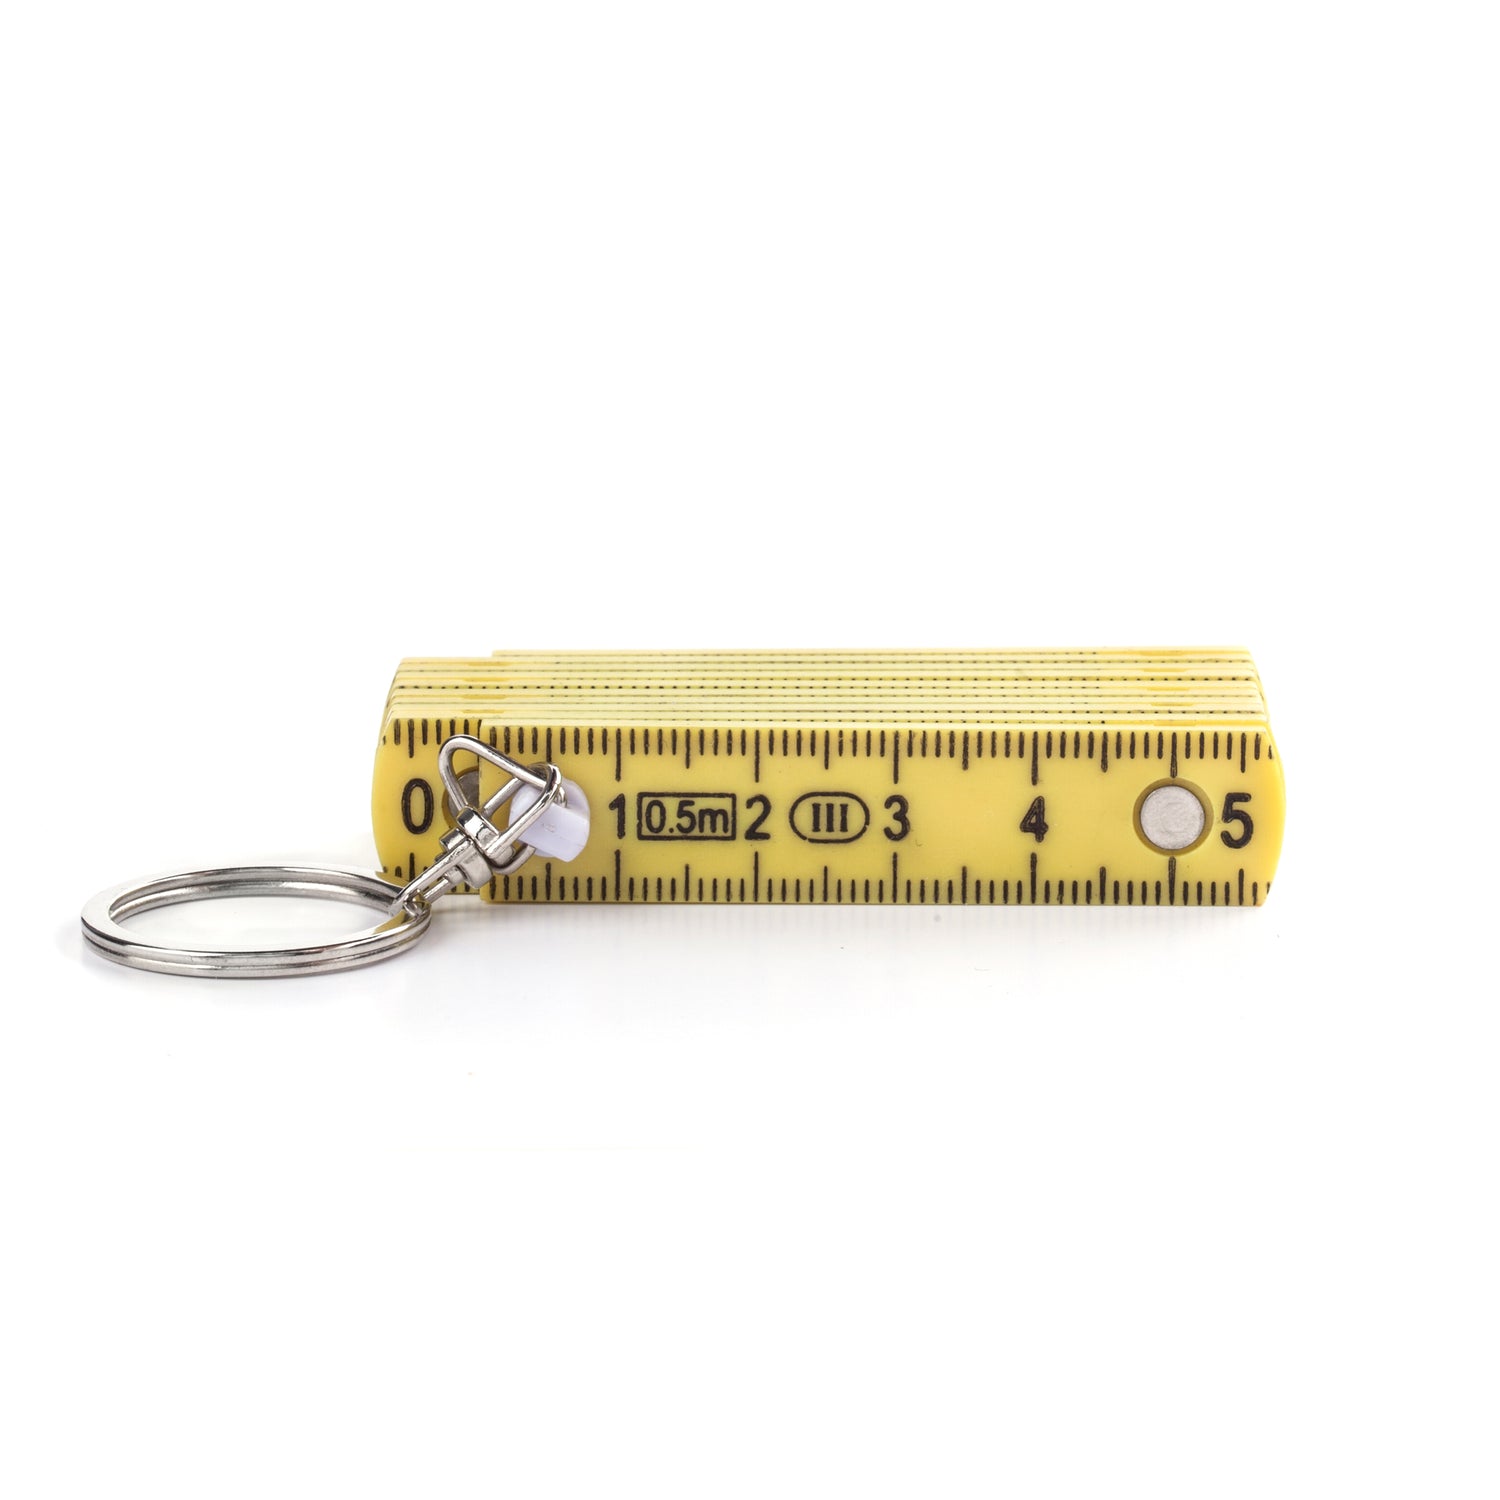 Small Measuring Tape Key Ring